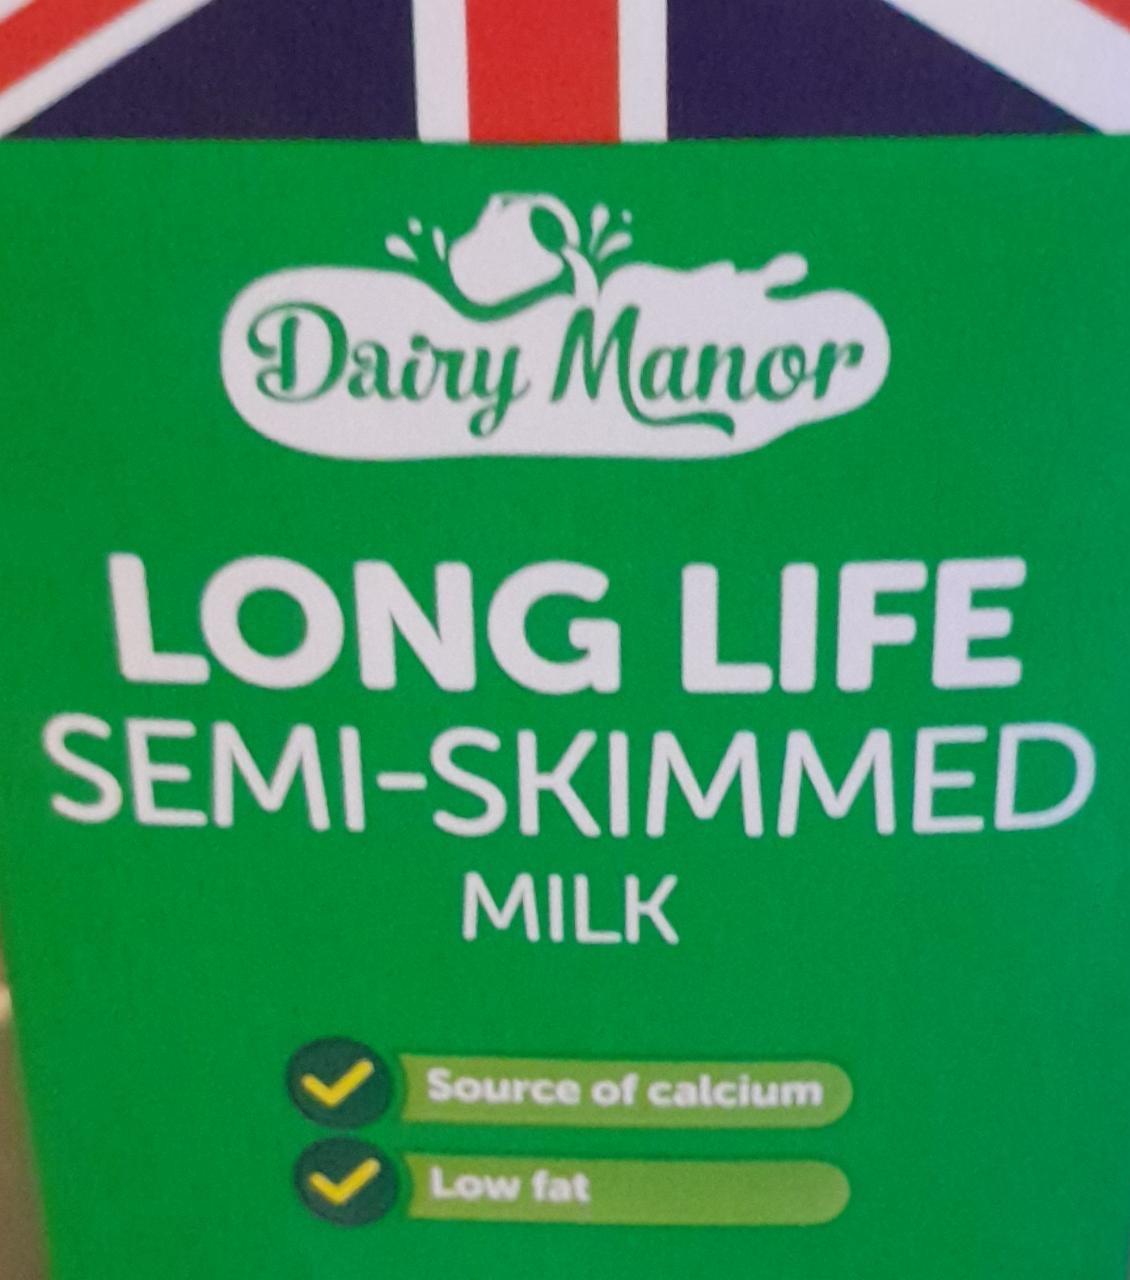 Zdjęcia - Long life semi-skimmed milk Dairy Manor